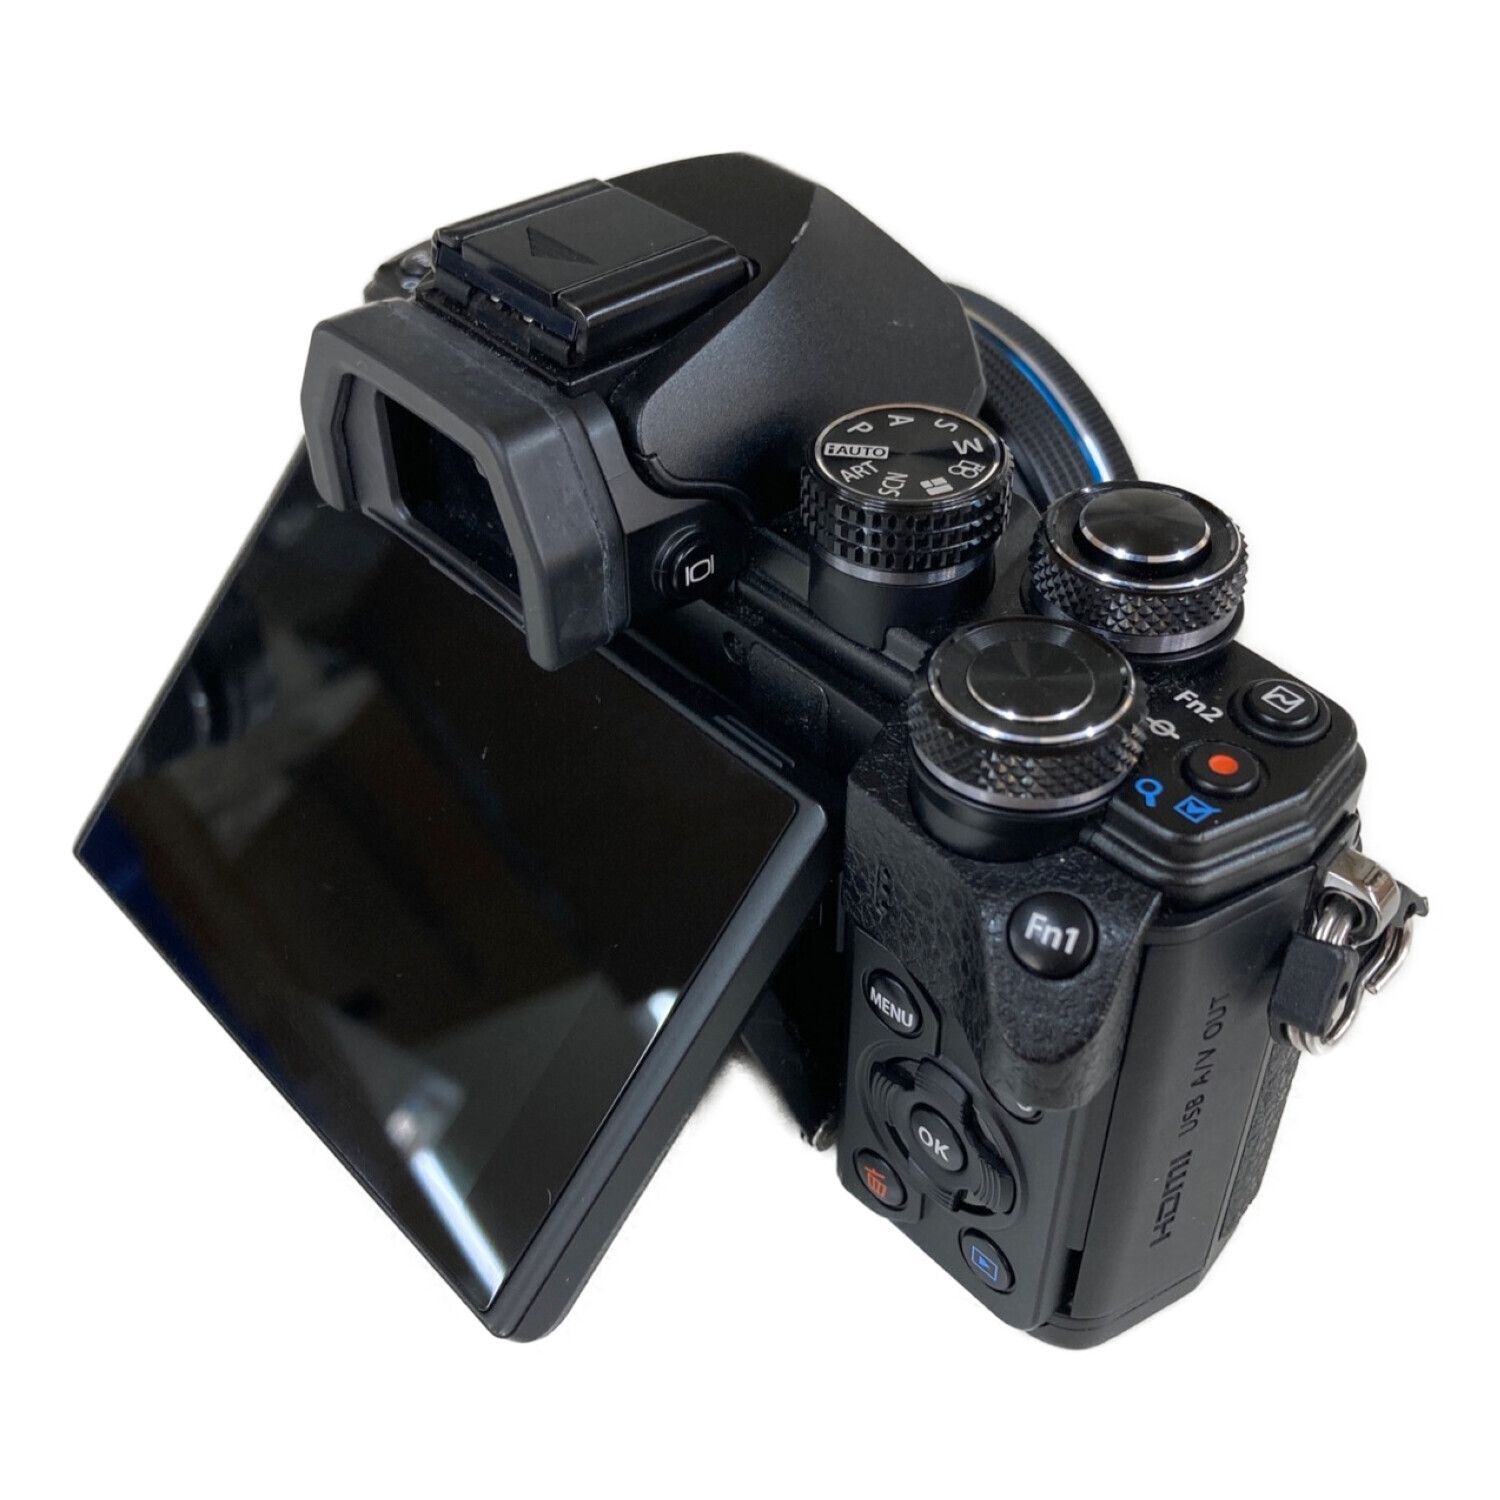 OLYMPUS (オリンパス) ミラーレス一眼カメラ OM-D E-M10 Mark II 